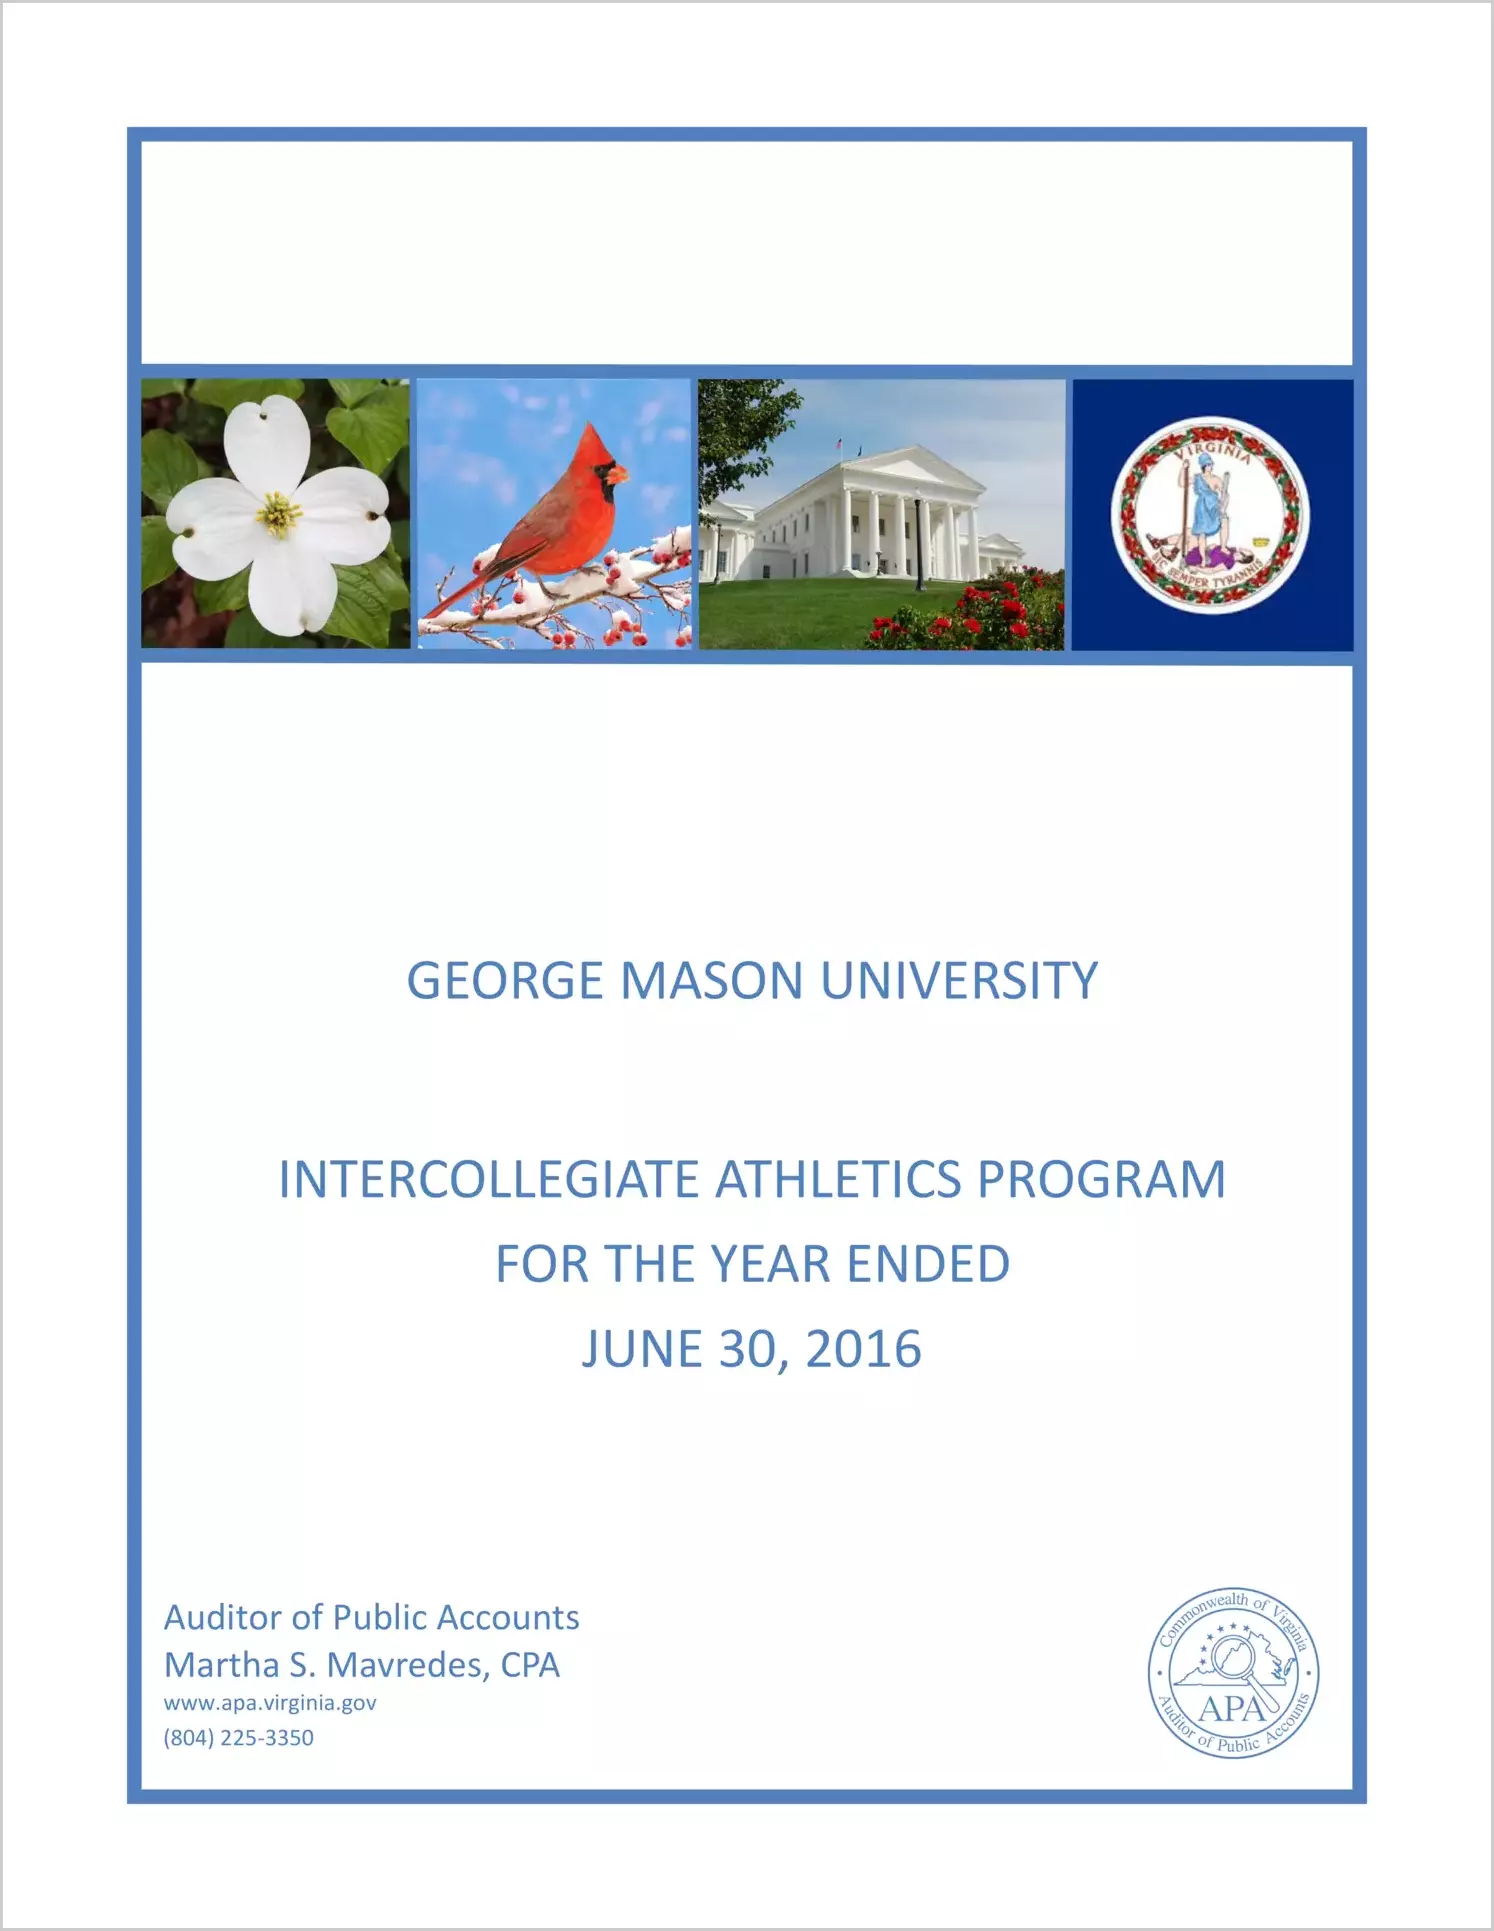 George Mason University Intercollegiate Athletics Program for the year ended June 30, 2016